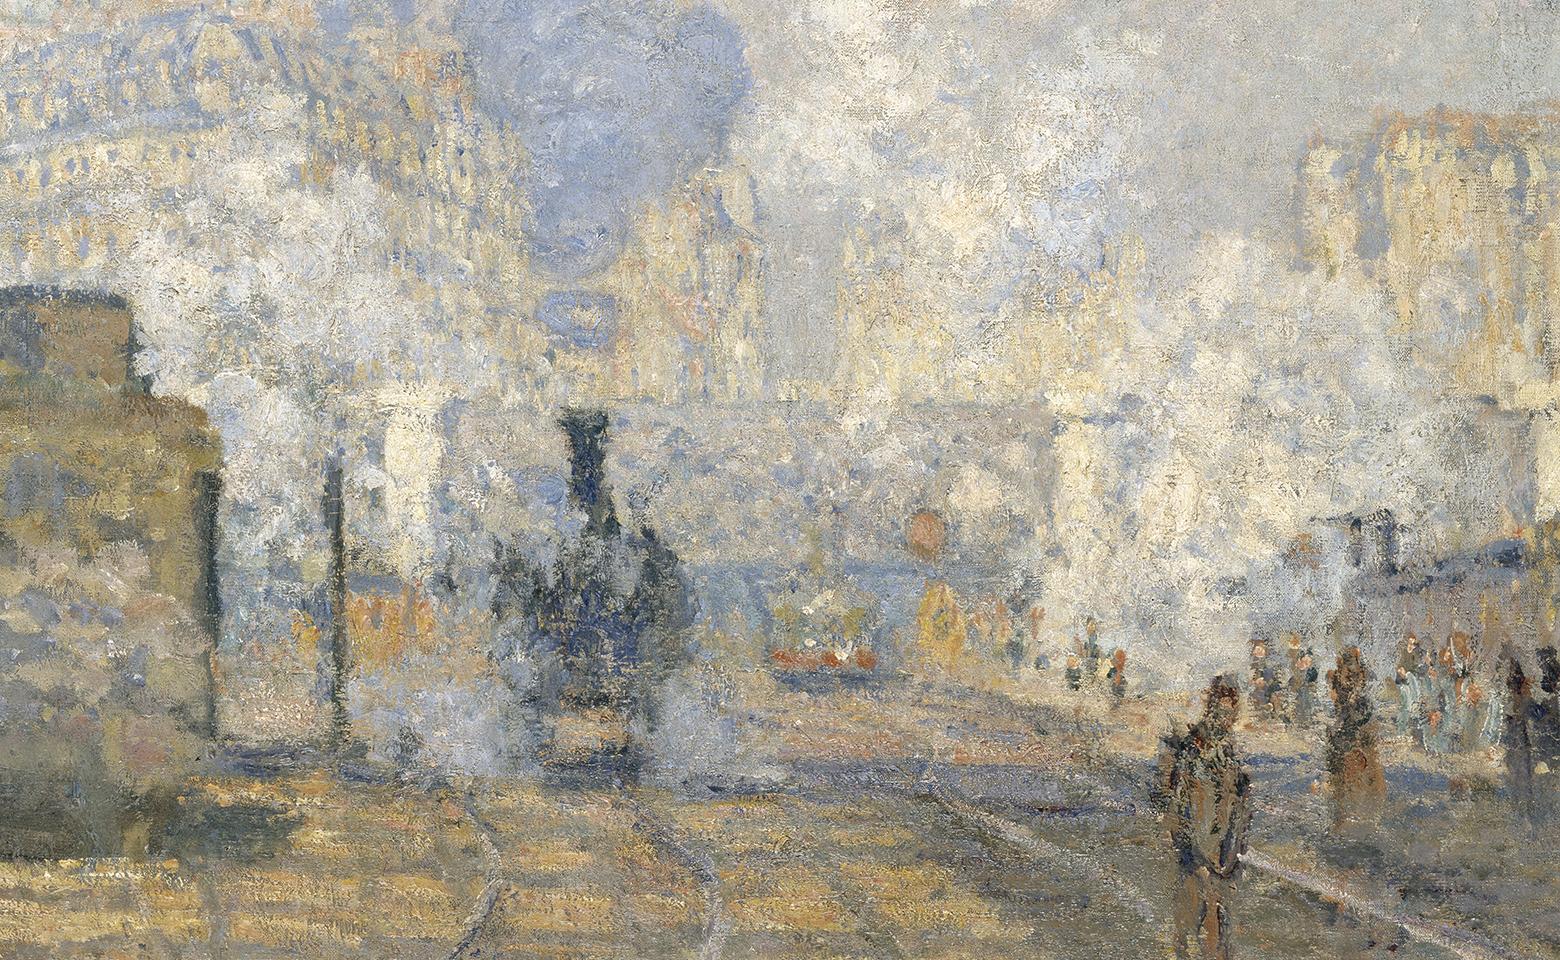 La Gare Saint-Lazare - Claude Monet